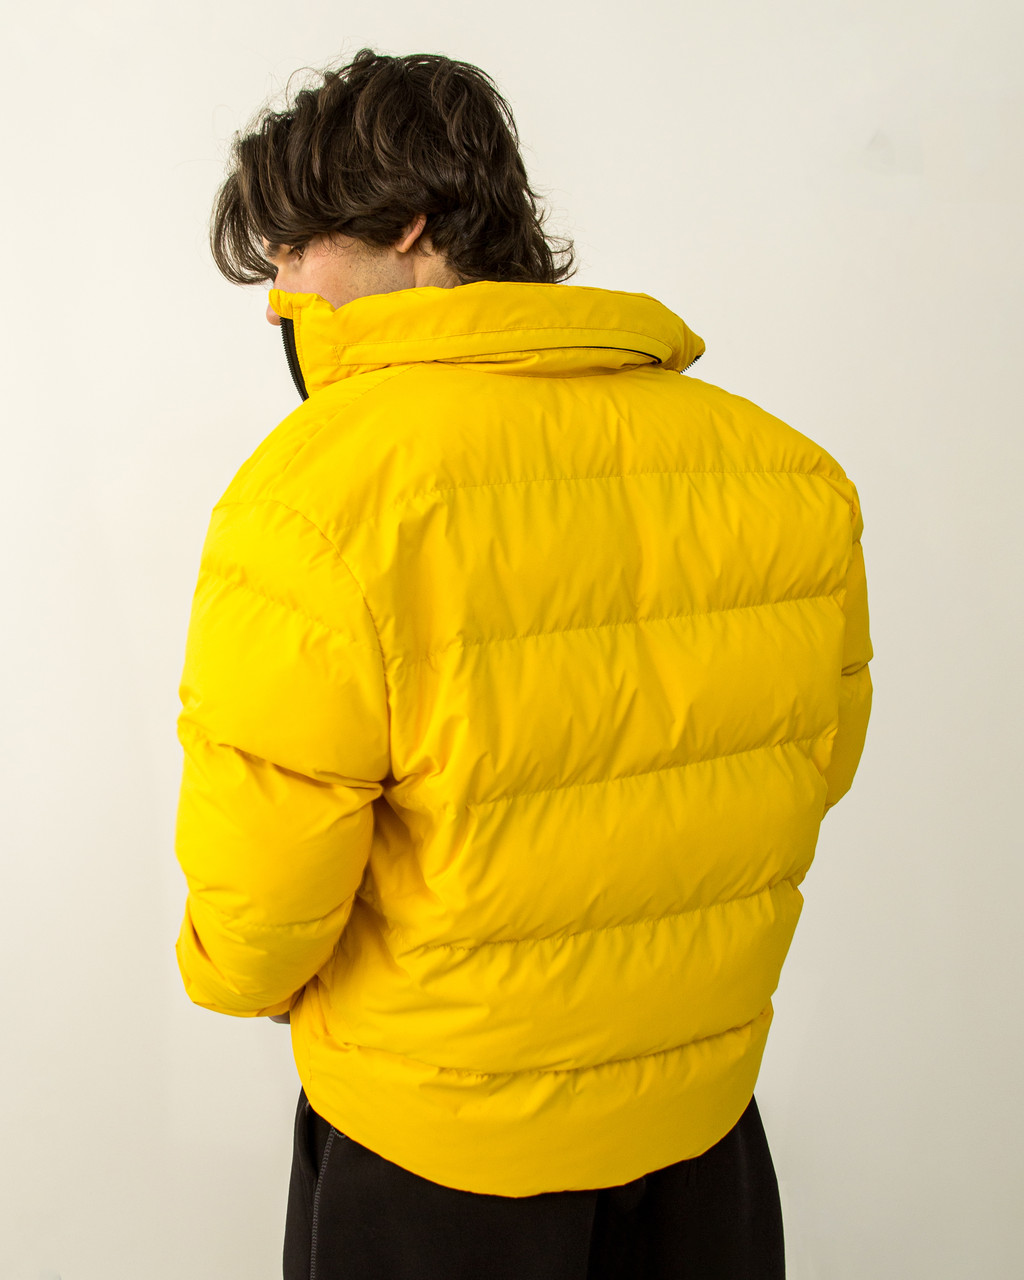 Коротка весняна куртка-пуховик Holla жовта Пушка Огонь - Фото 10